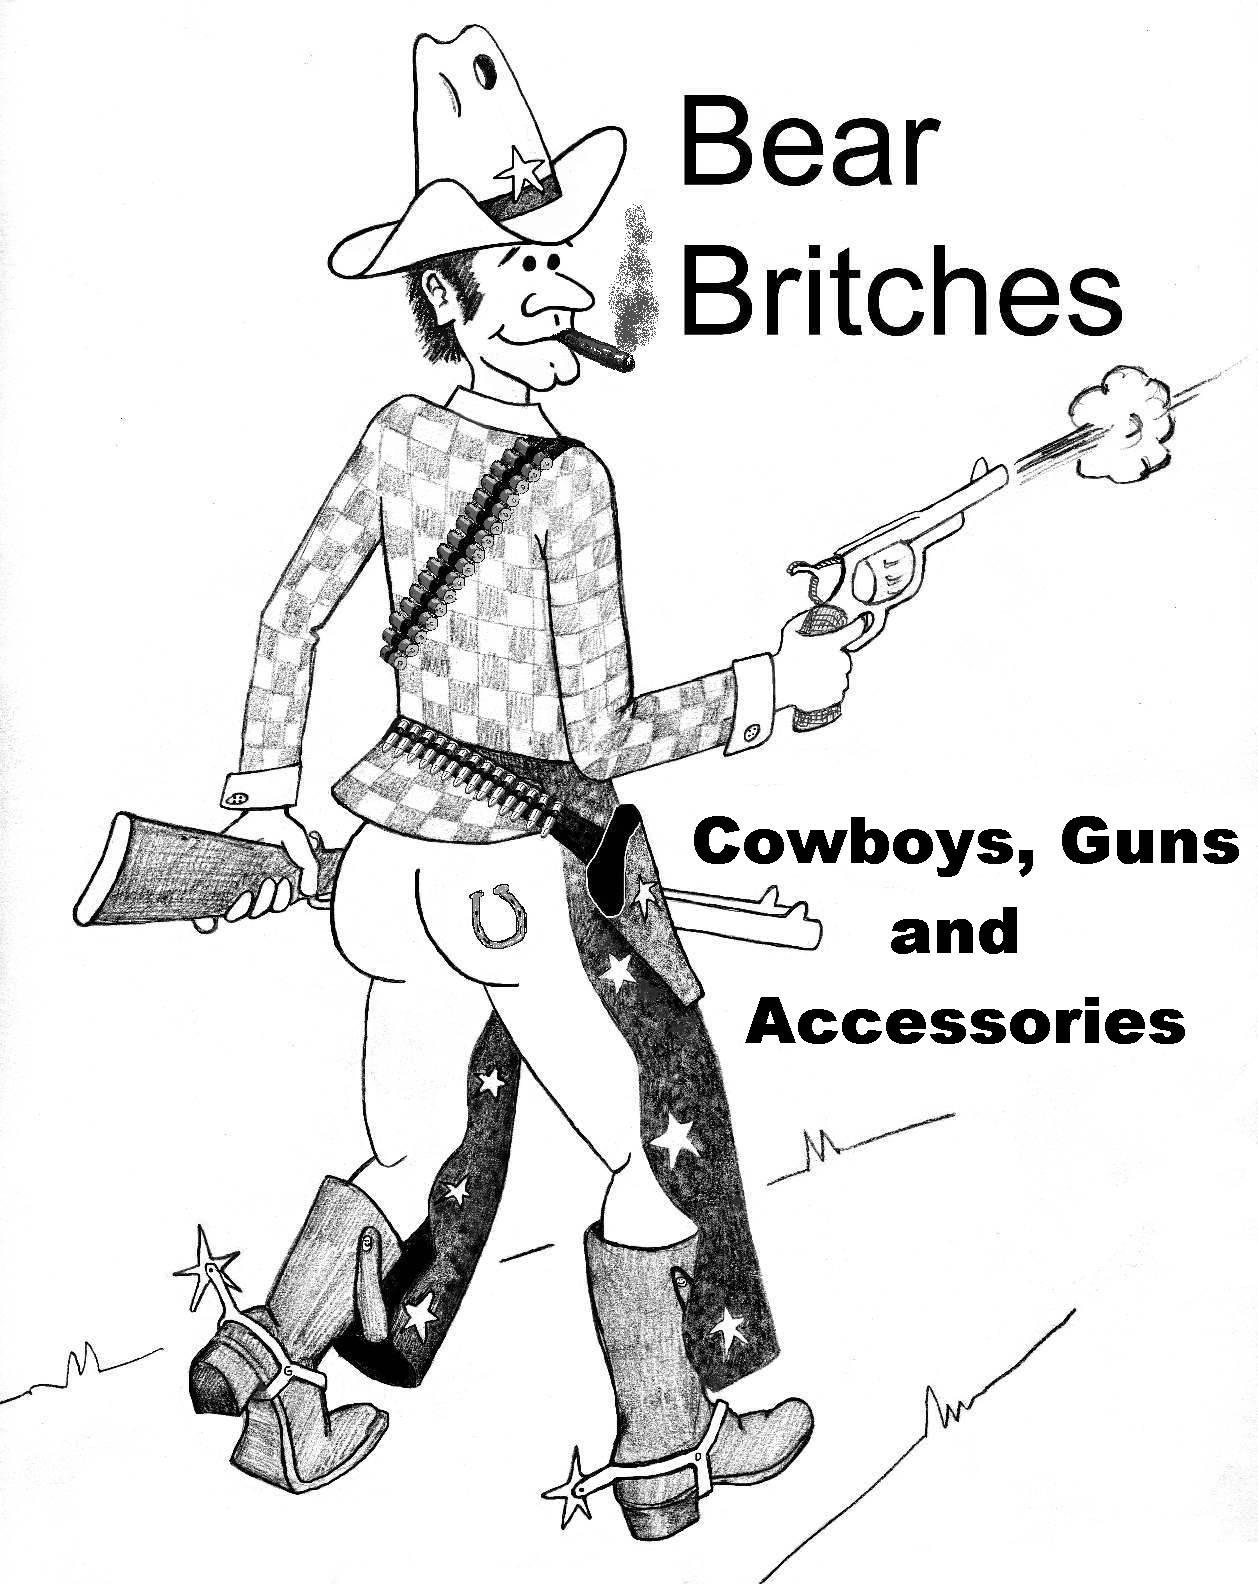 Cowboys, Guns and Accessories